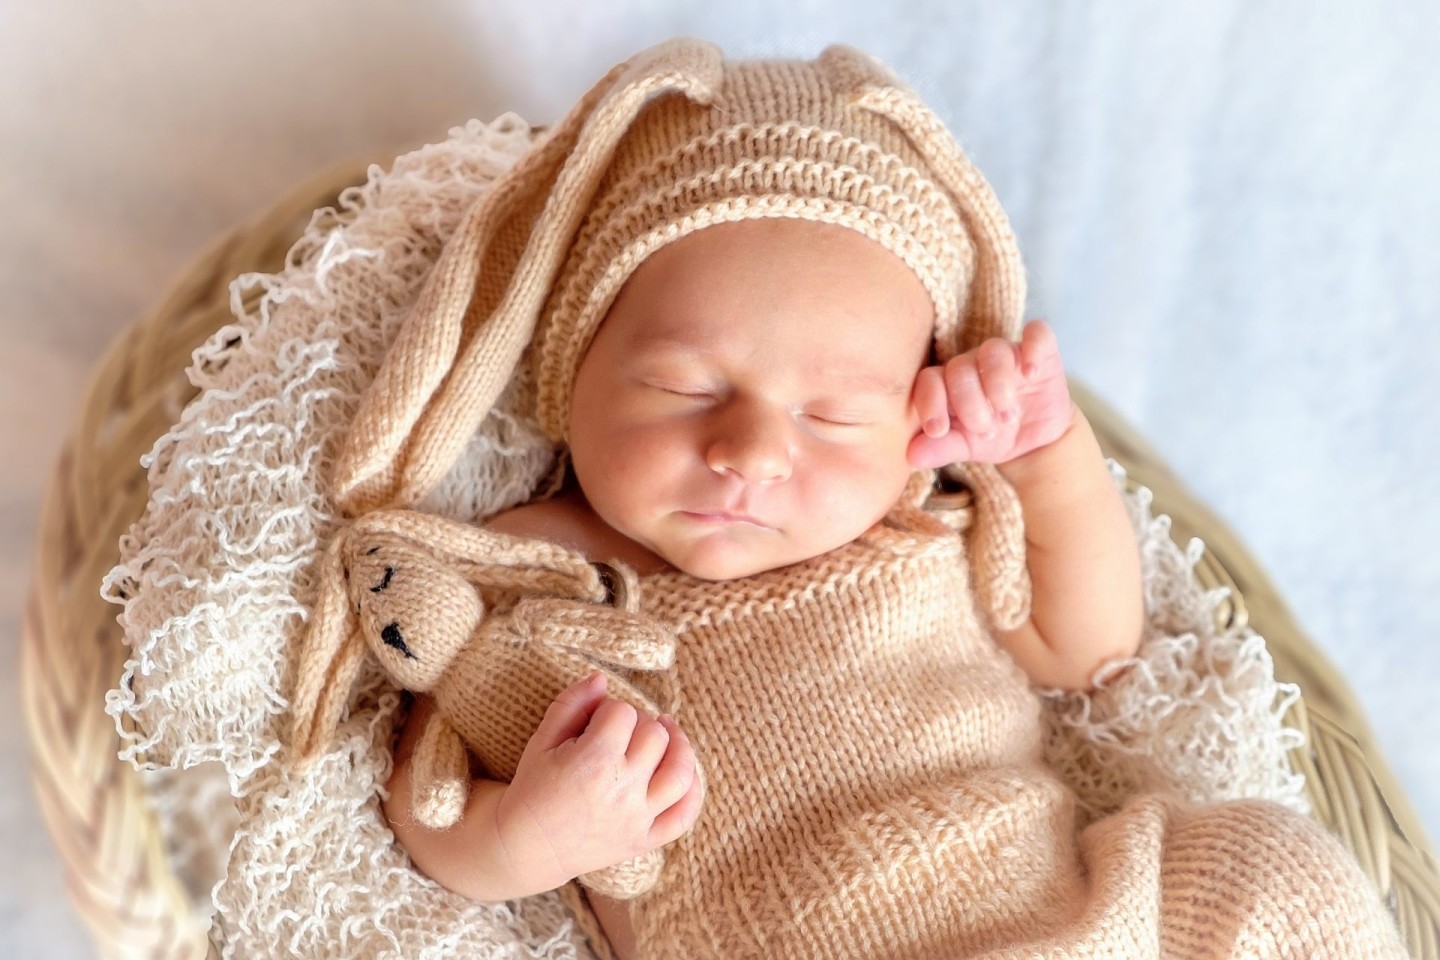 Newborn in cute outfit sleeping